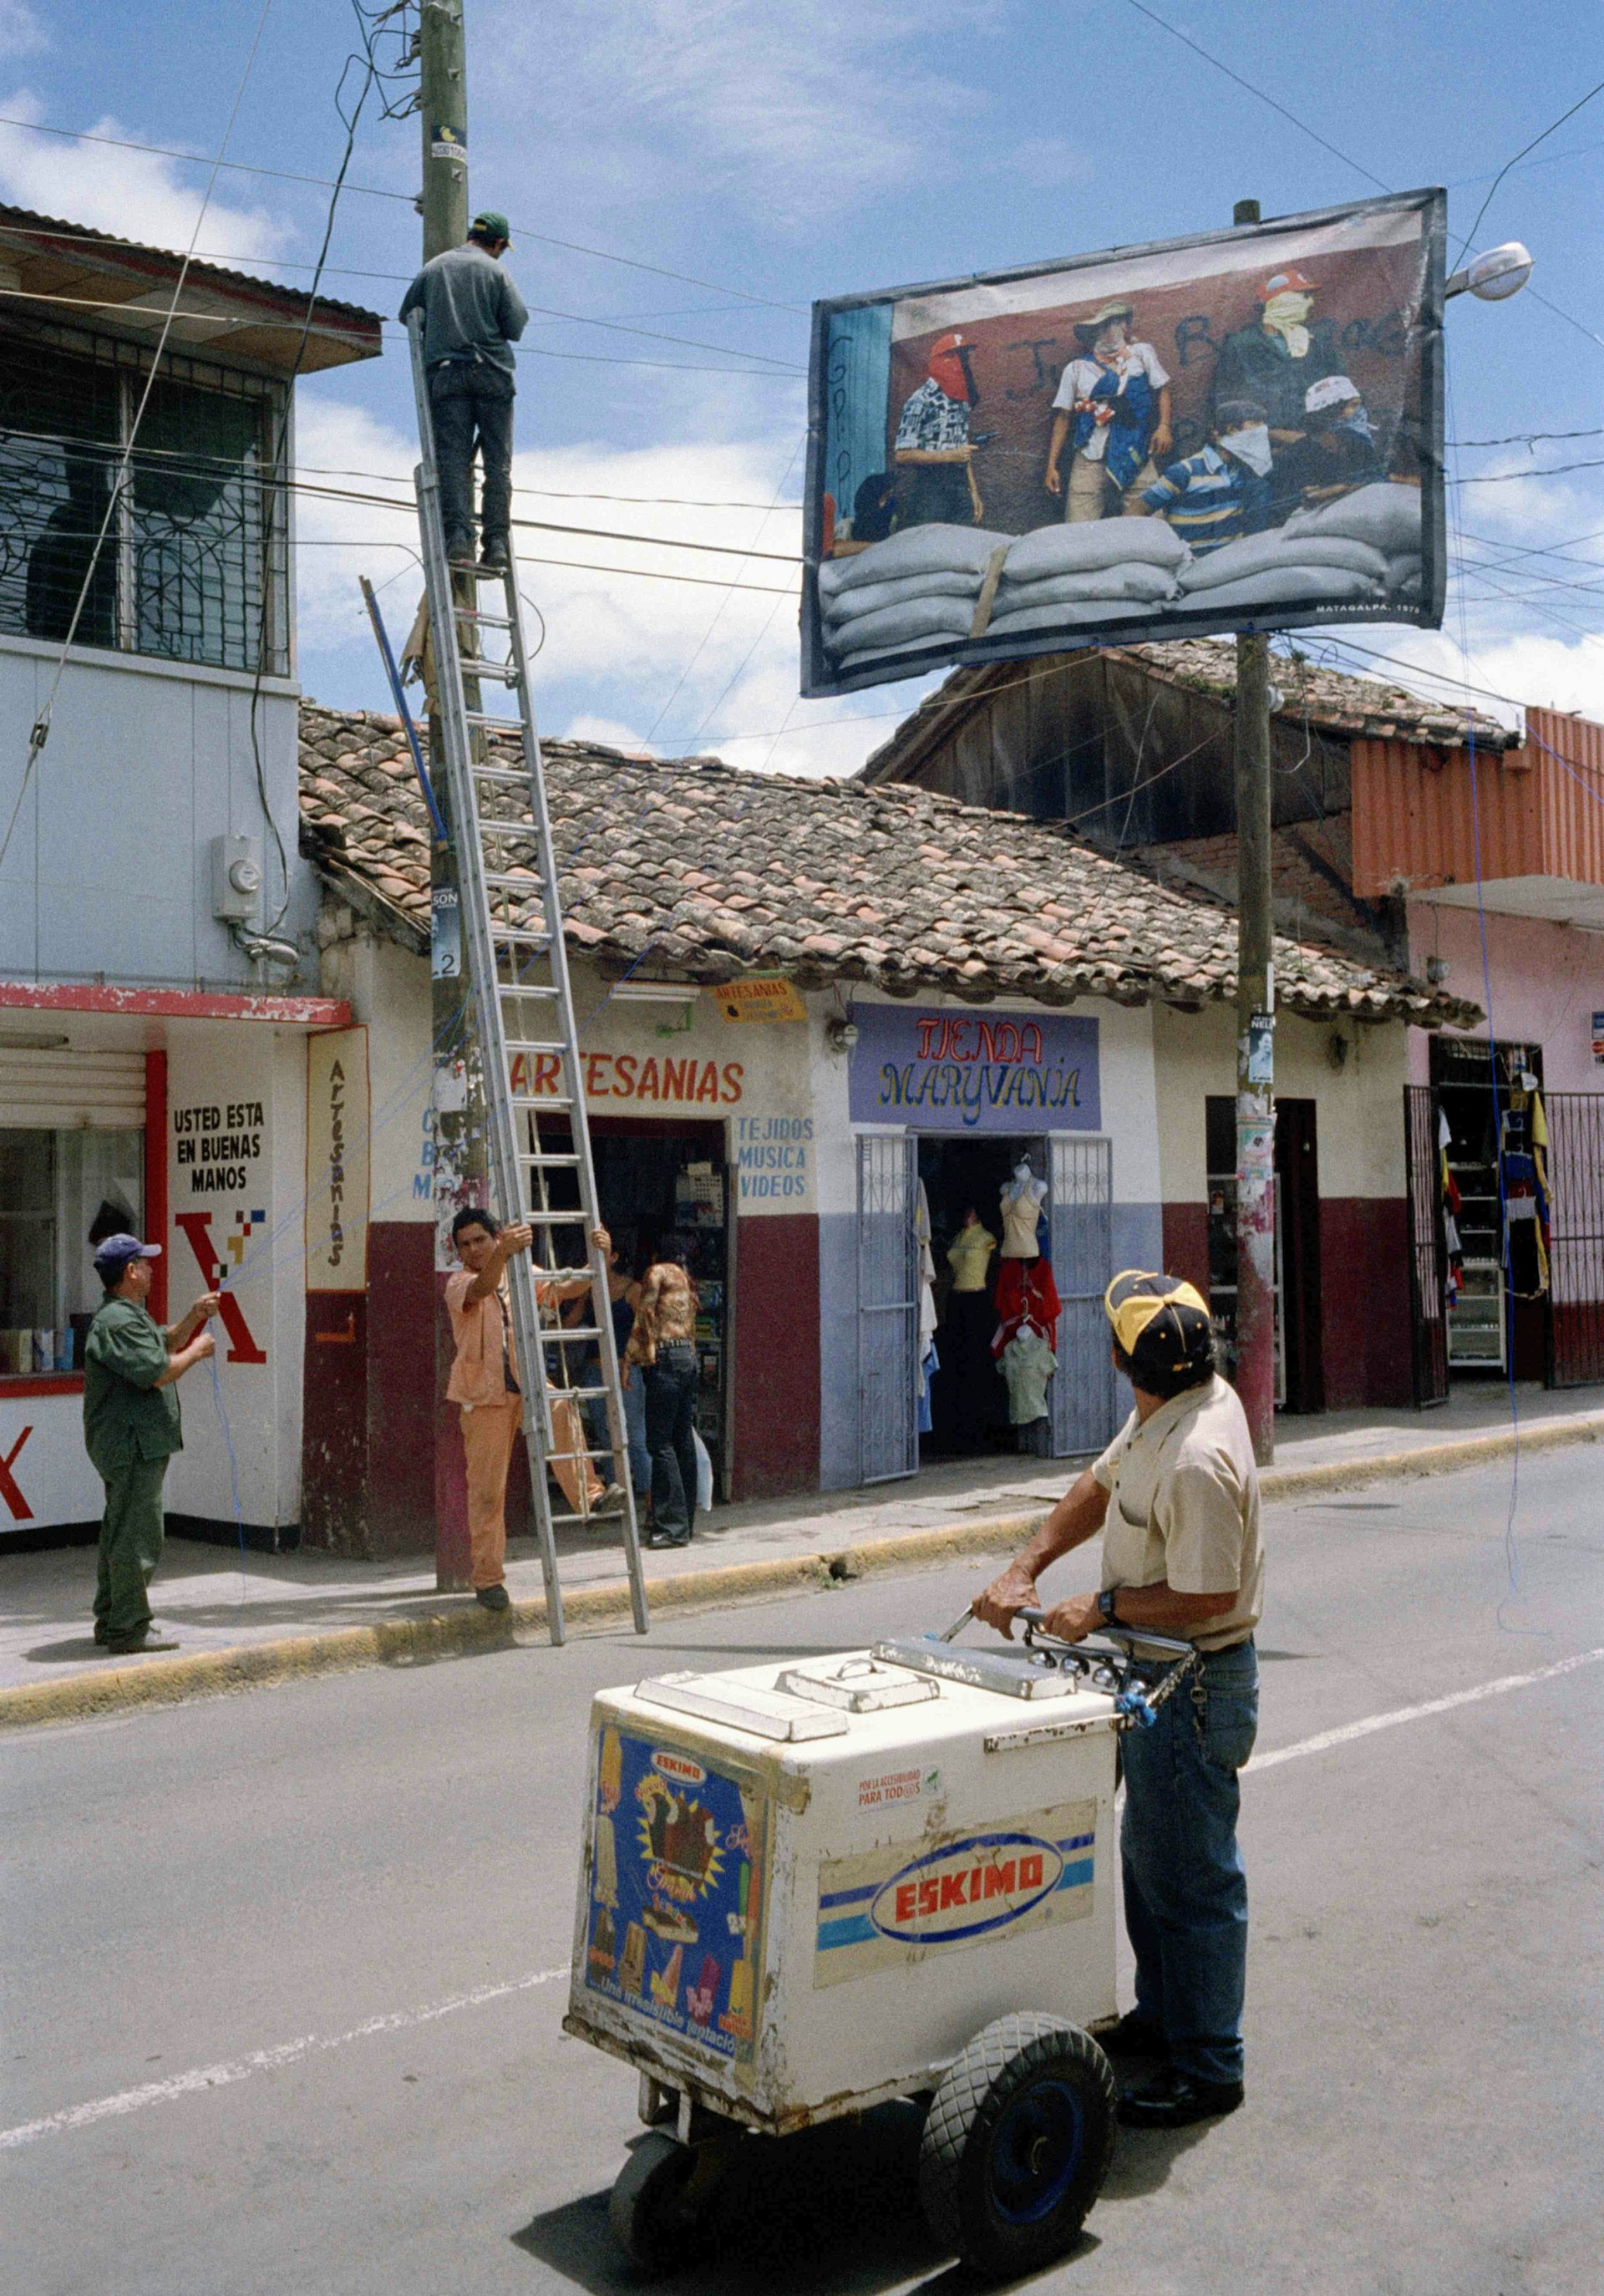 Awaiting counterattack by the Guard, Matagalpa, September 1978 from the series Reframing History